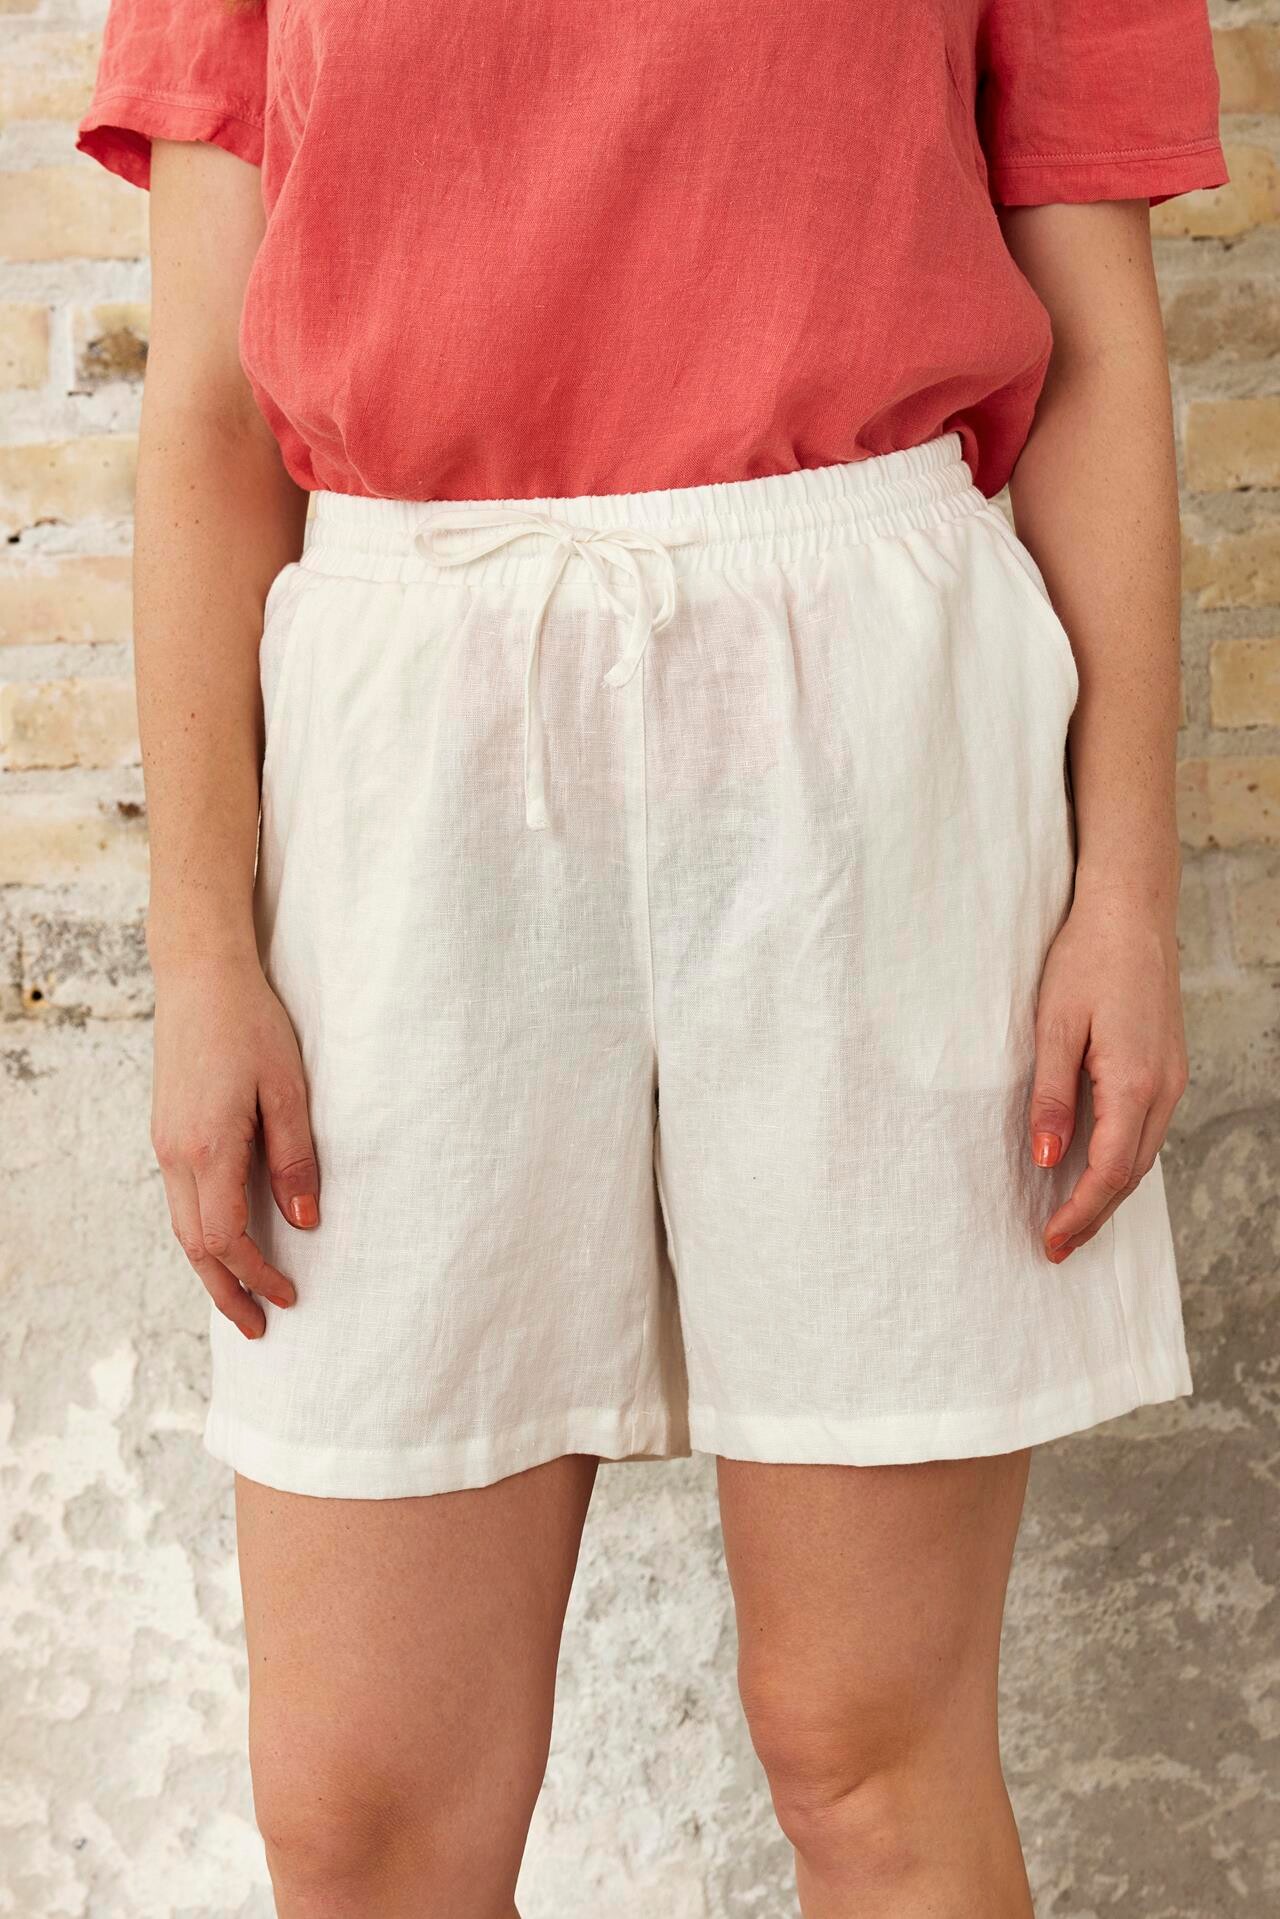 Se IN FRONT Linea Shorts, Farve: Off White, Størrelse: XL, Dame hos Infront Women